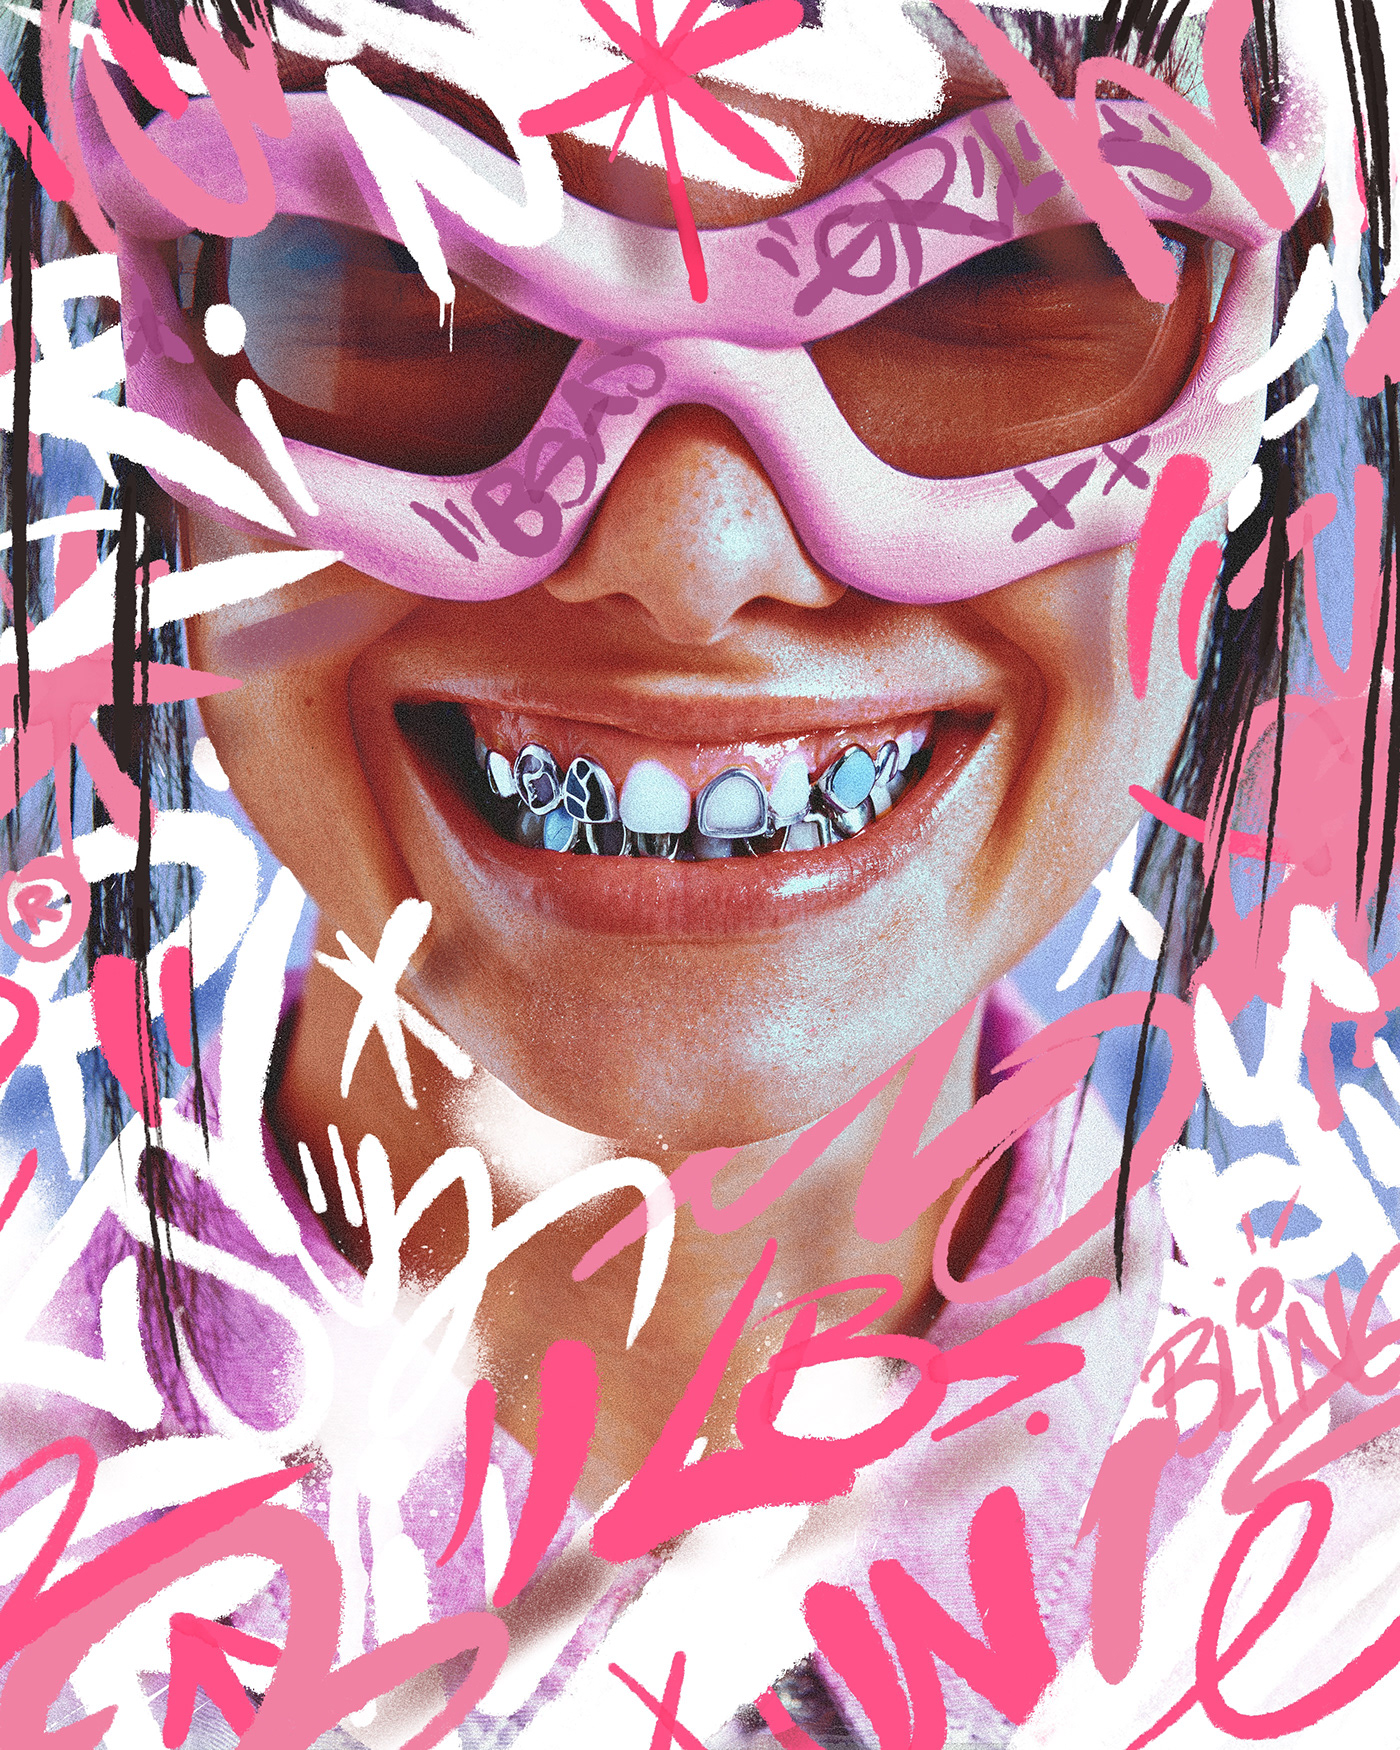 jewlery Digital Art  Digital Collage Fashion  fashion editorial bernardo henning fashion photography Sunglasses Graffiti Grills